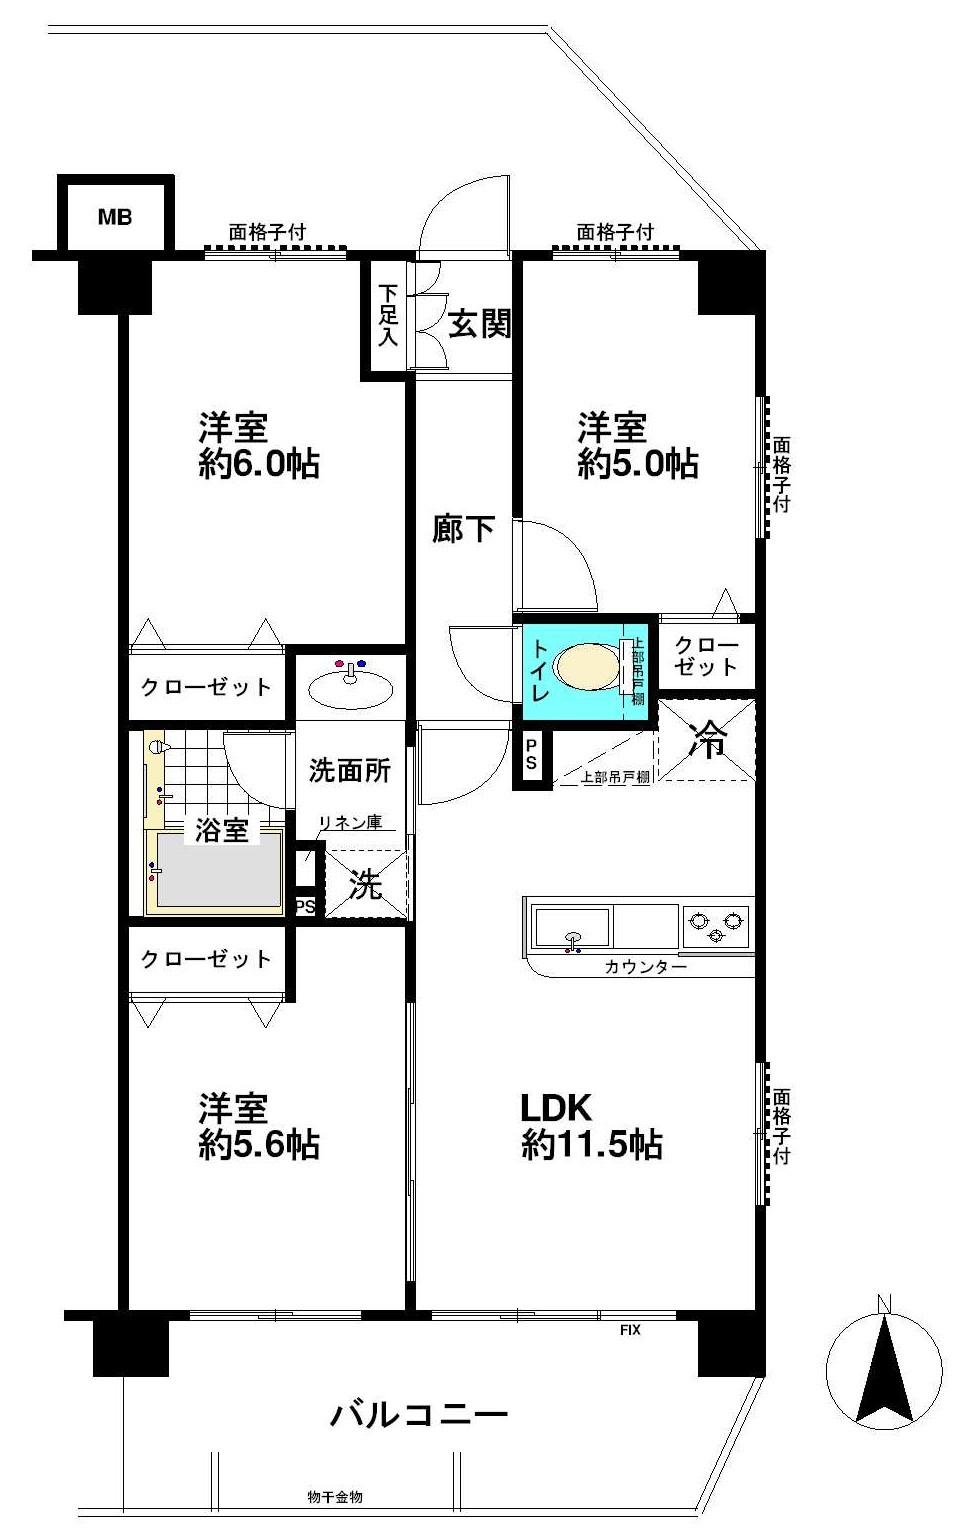 Floor plan. 3LDK, Price 25,900,000 yen, Footprint 60 sq m , Balcony area 10.35 sq m